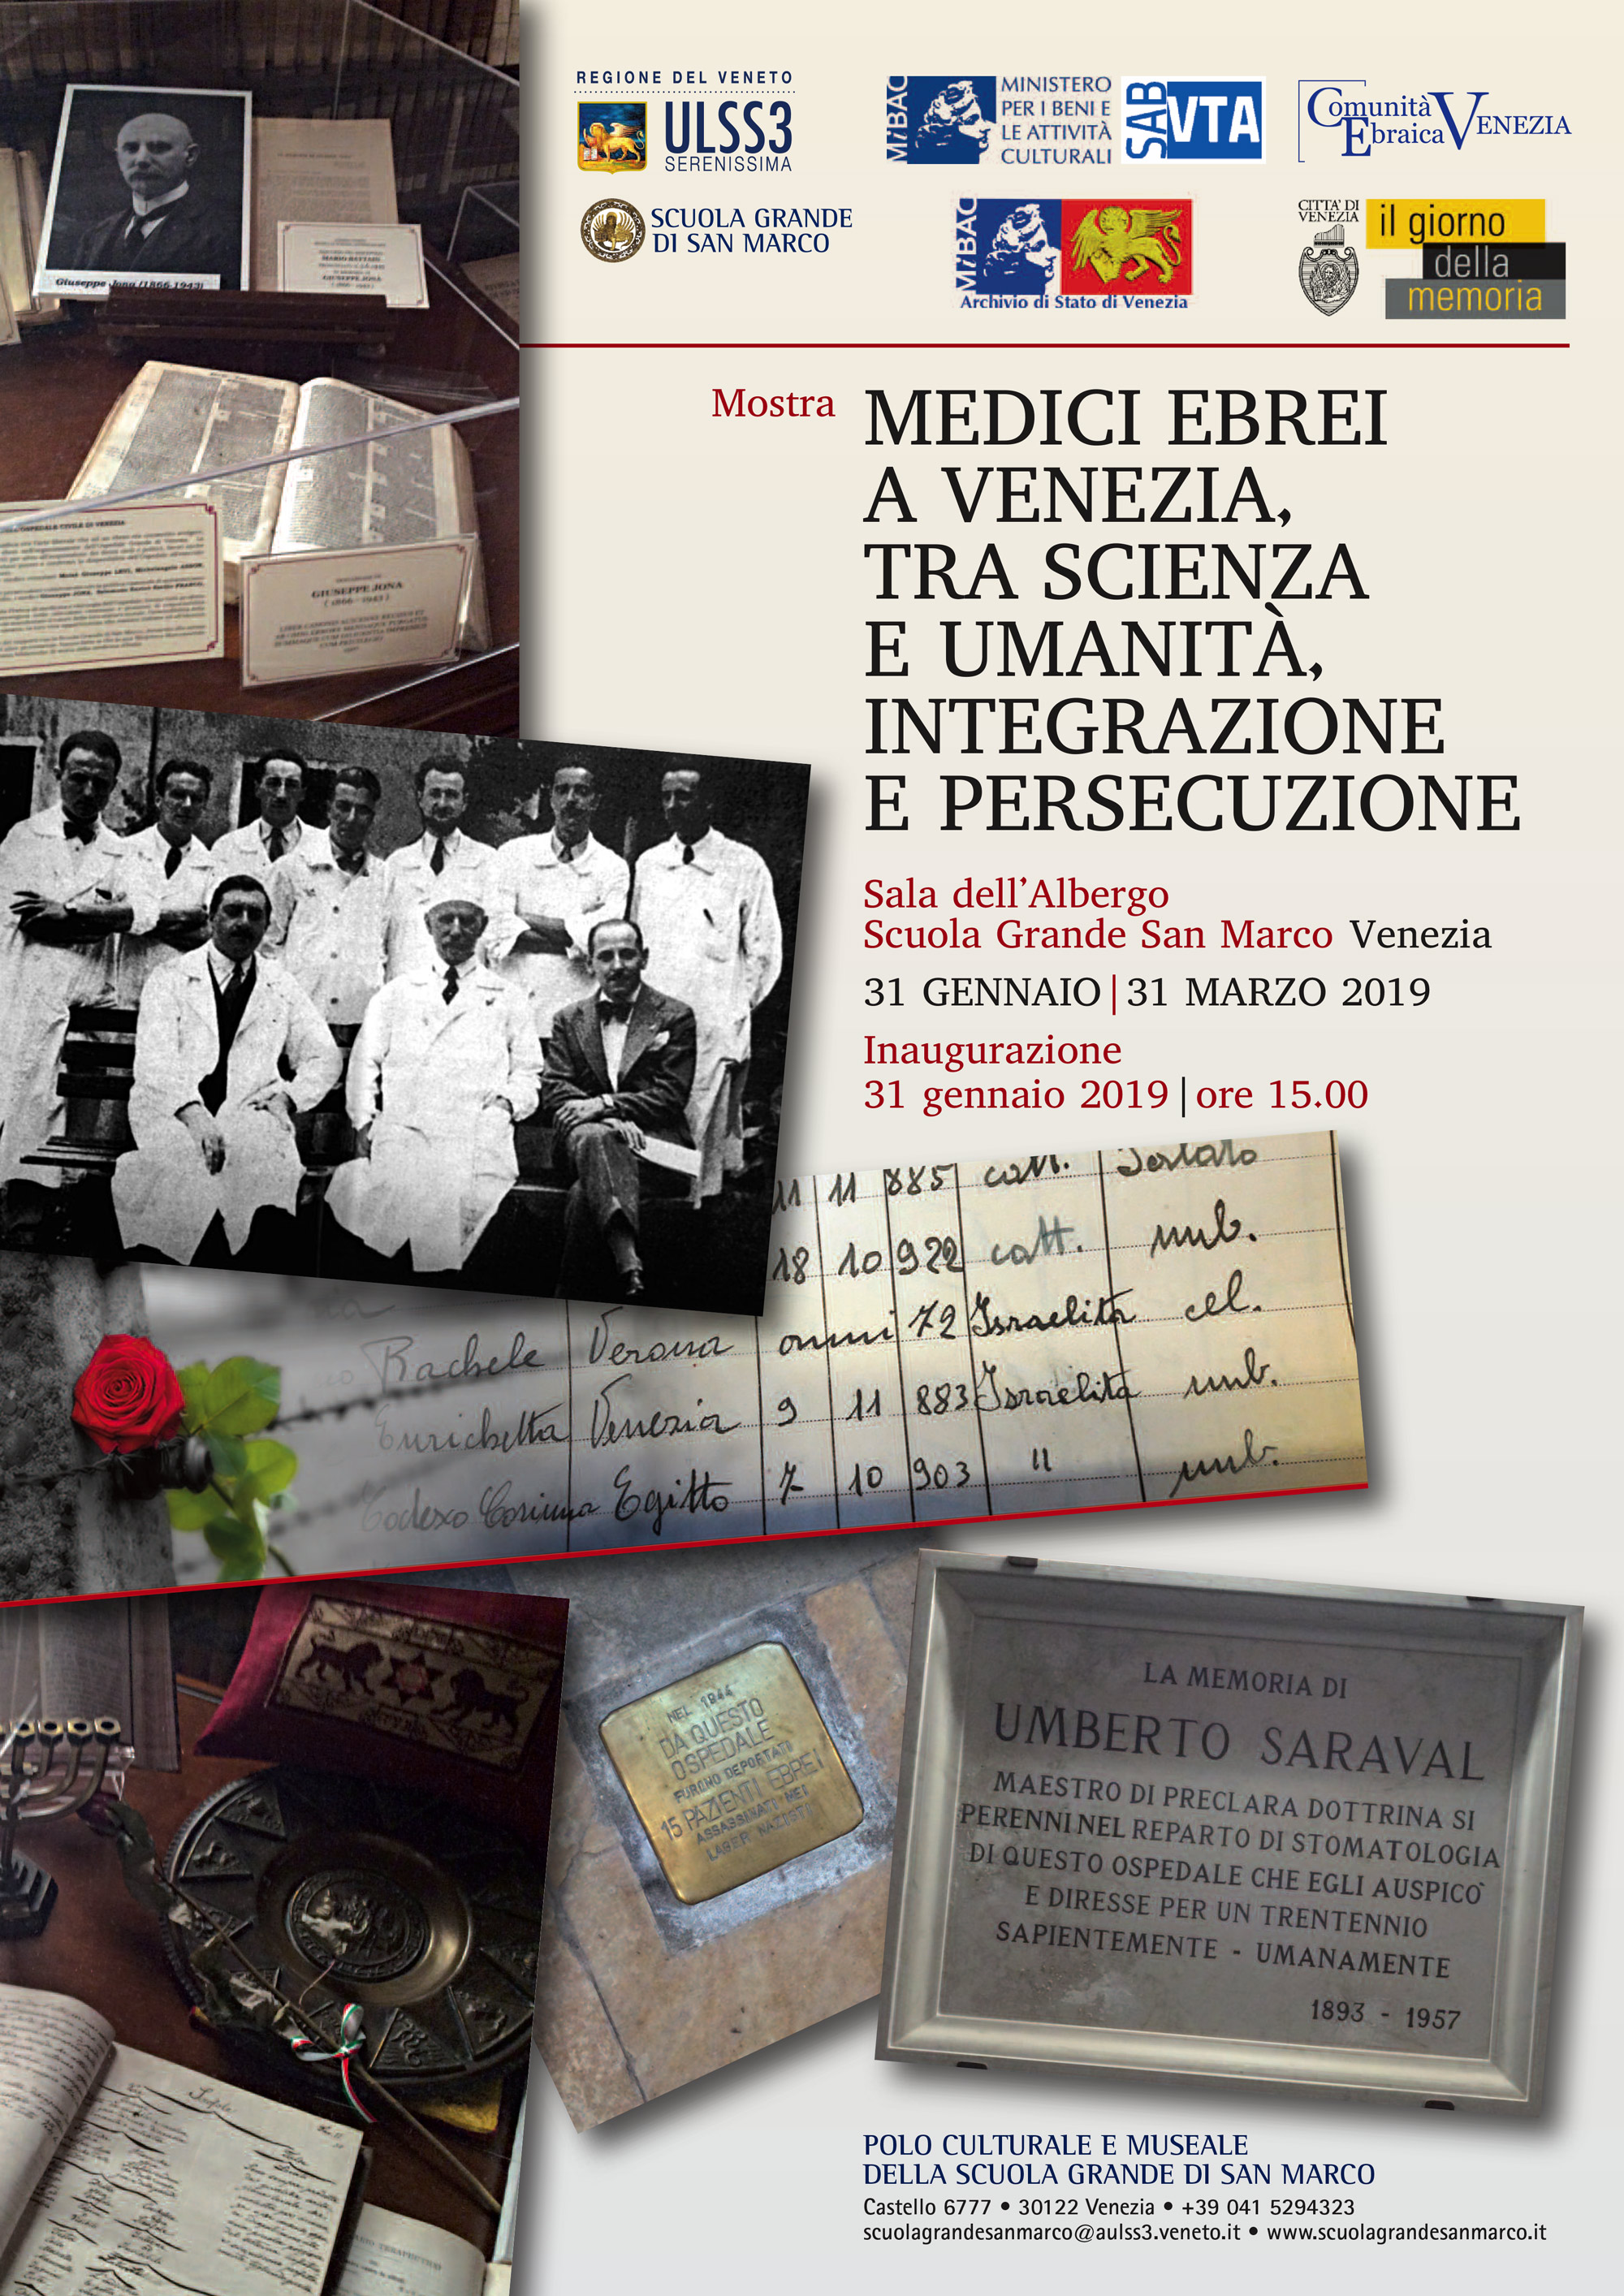 Mostra Medici Ebrei a Venezia, tra scienza e umanità, integrazione e persecuzione